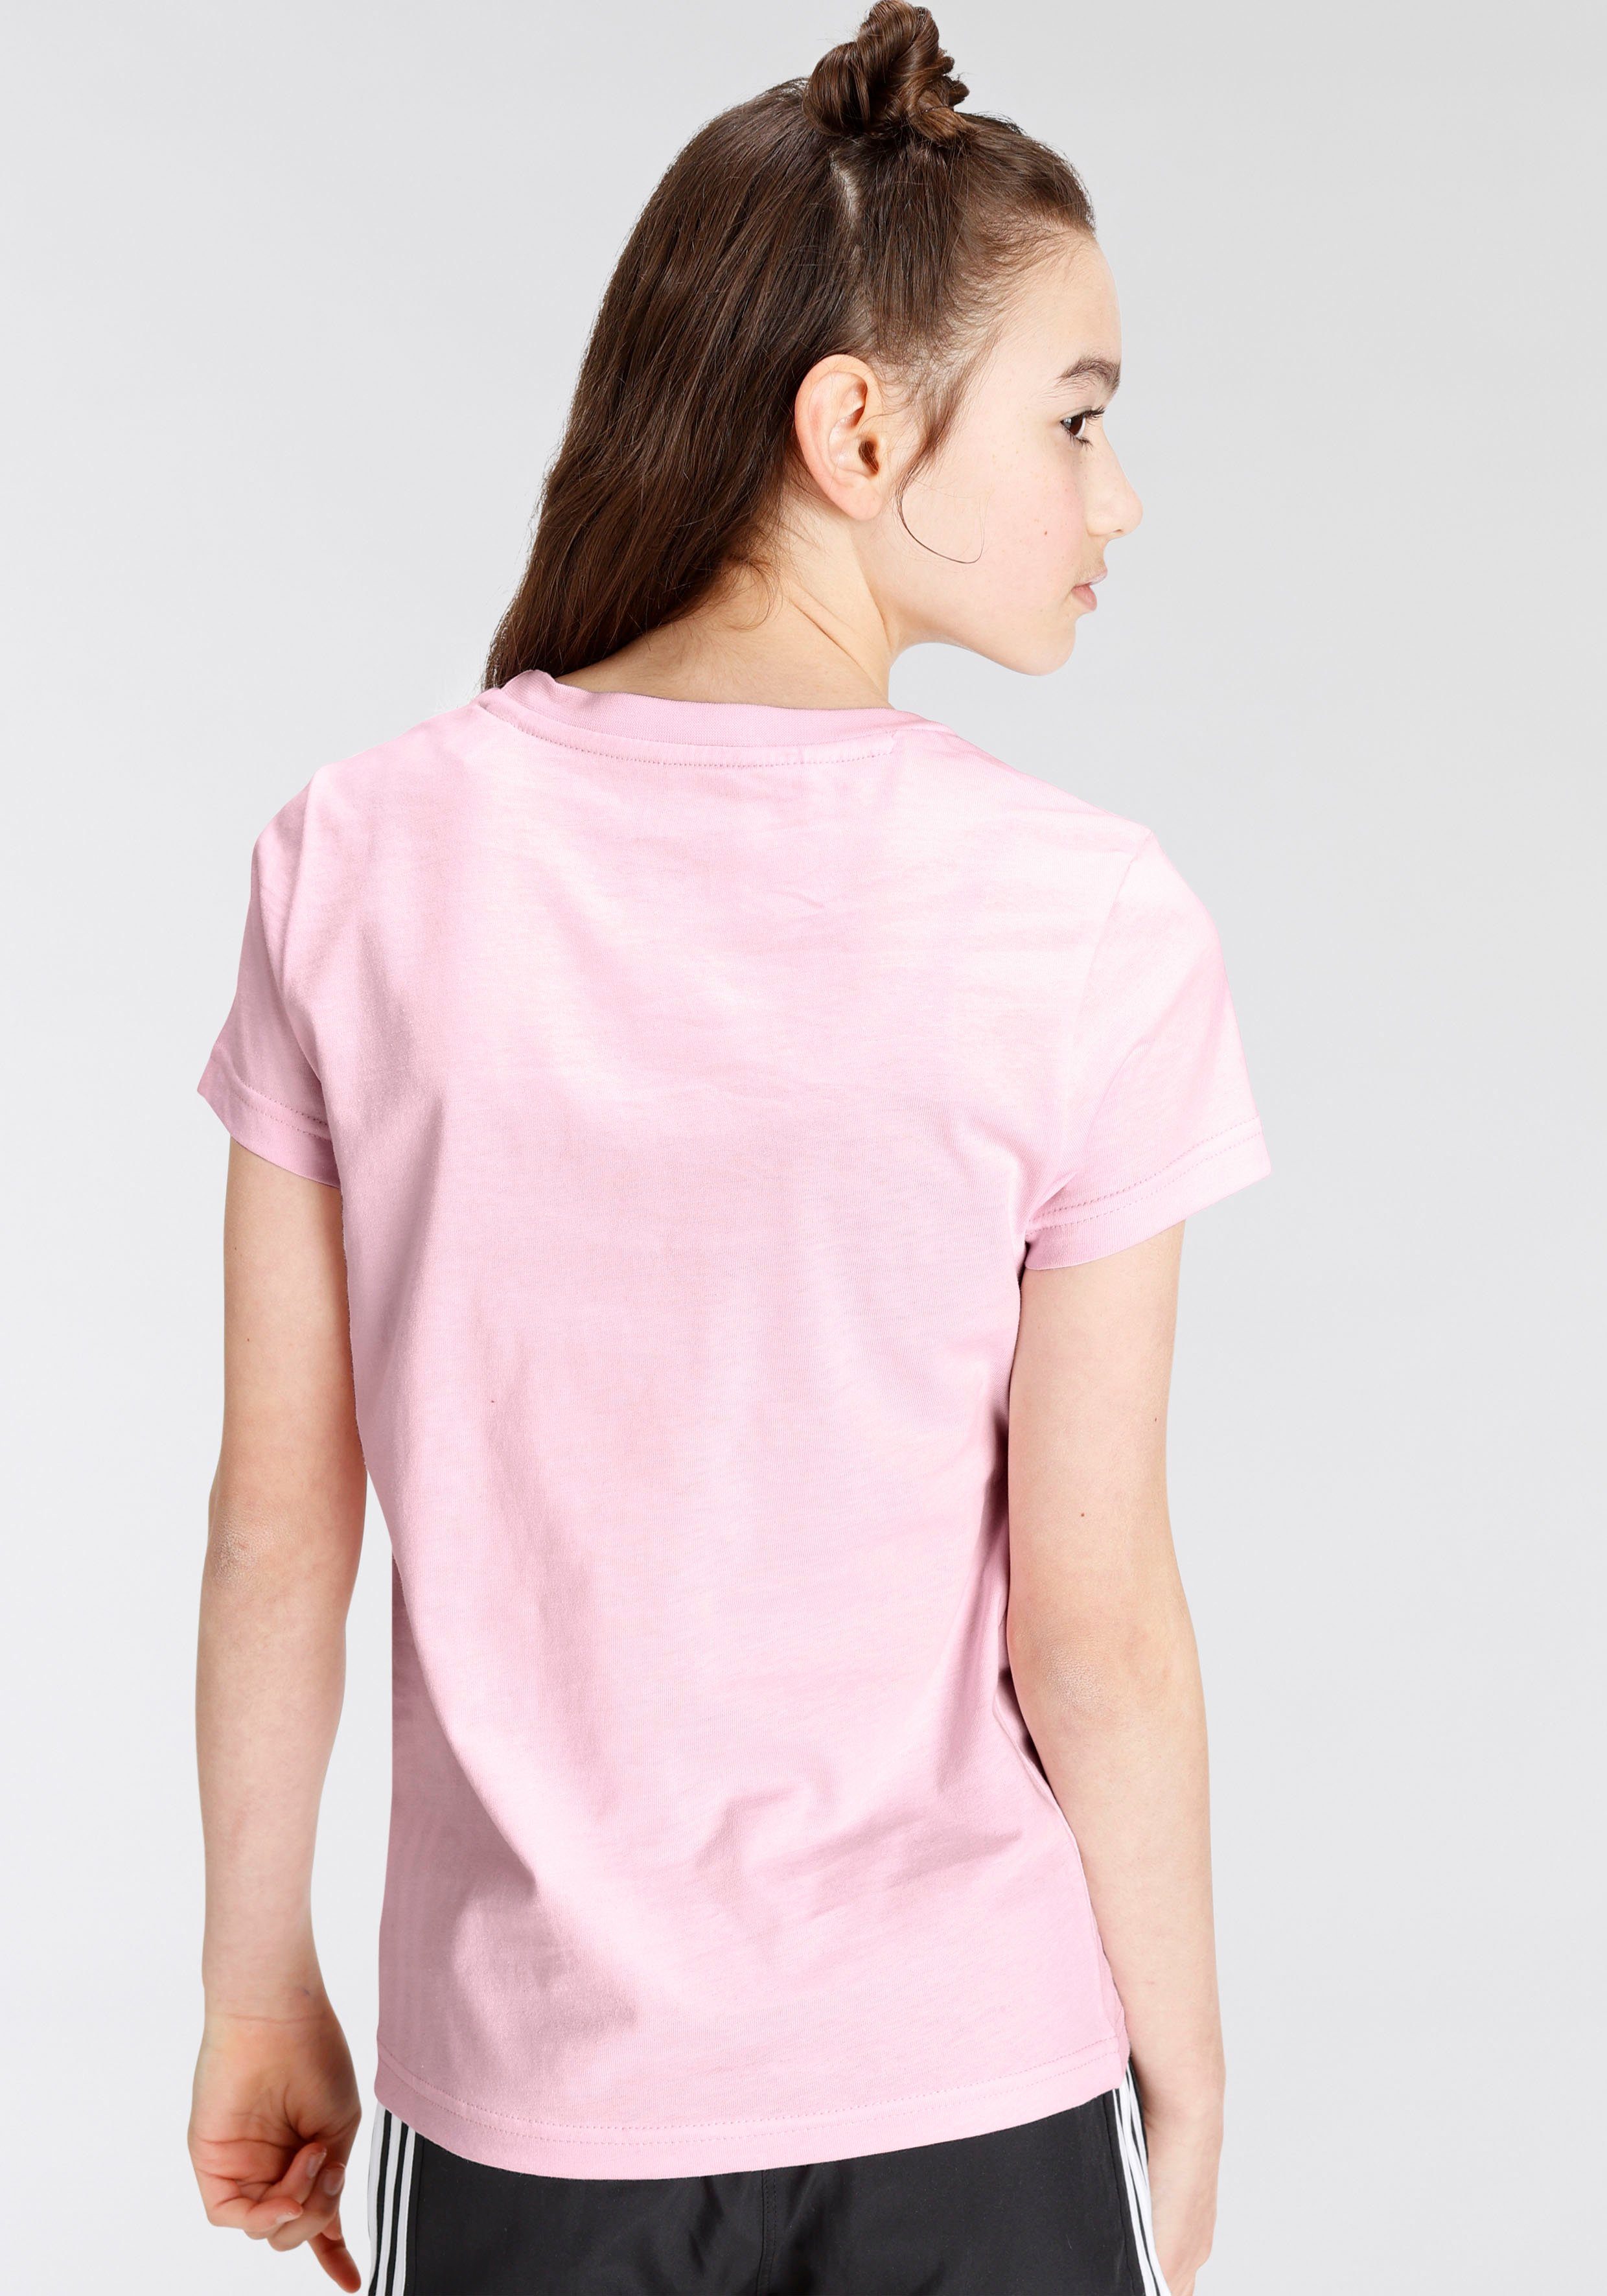 LOGO Clear Pink BIG adidas T-Shirt / Sportswear ESSENTIALS White COTTON